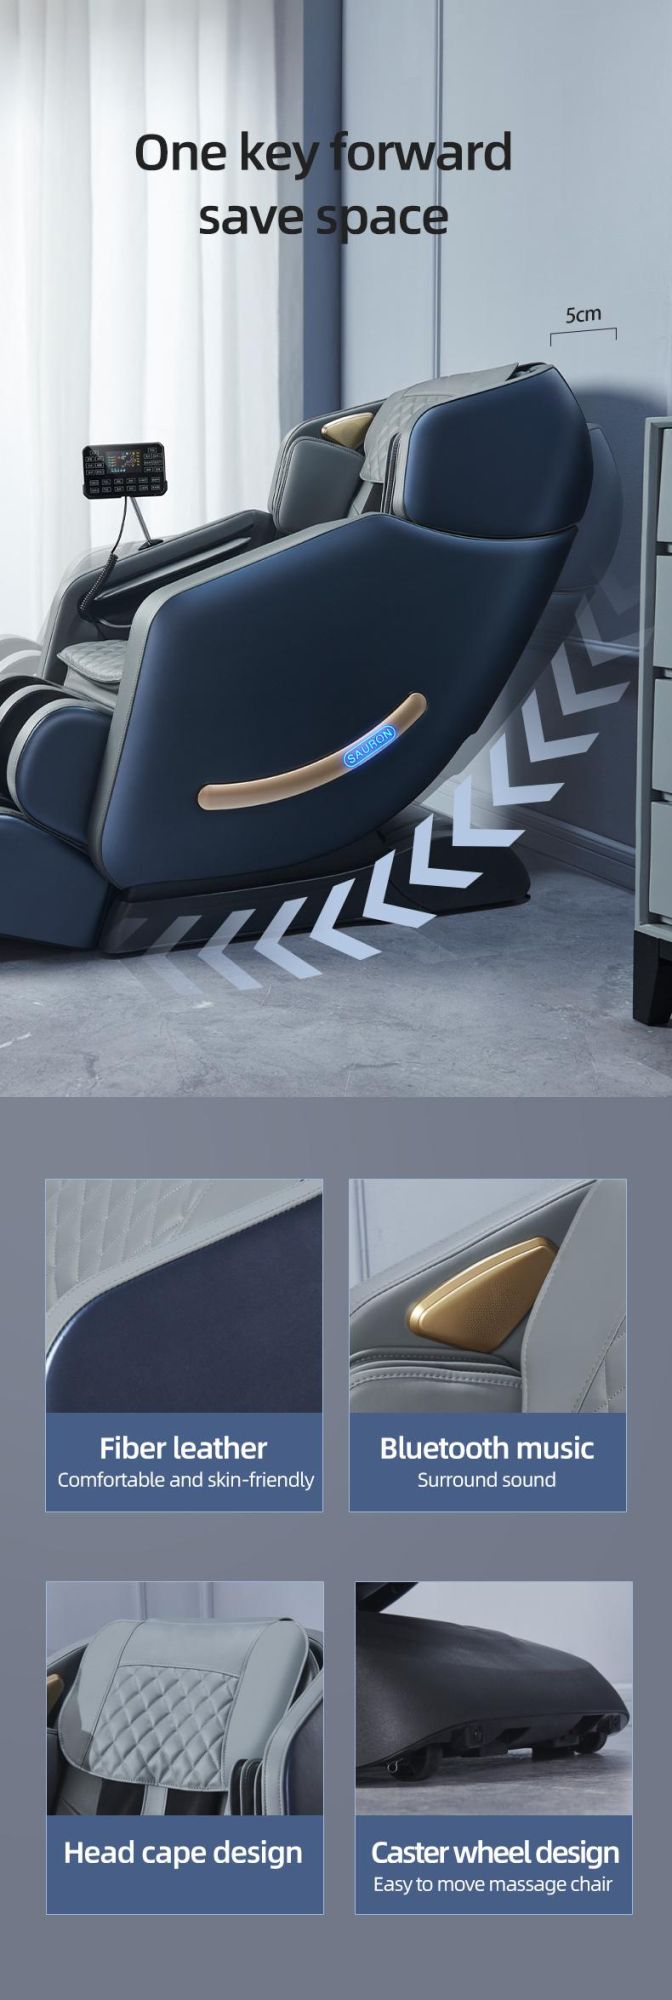 Sauron E300 2022 New SL Track 3D Full Body Thai Stretch Zero Gravity Massage Chair Recliner with Foot Massage